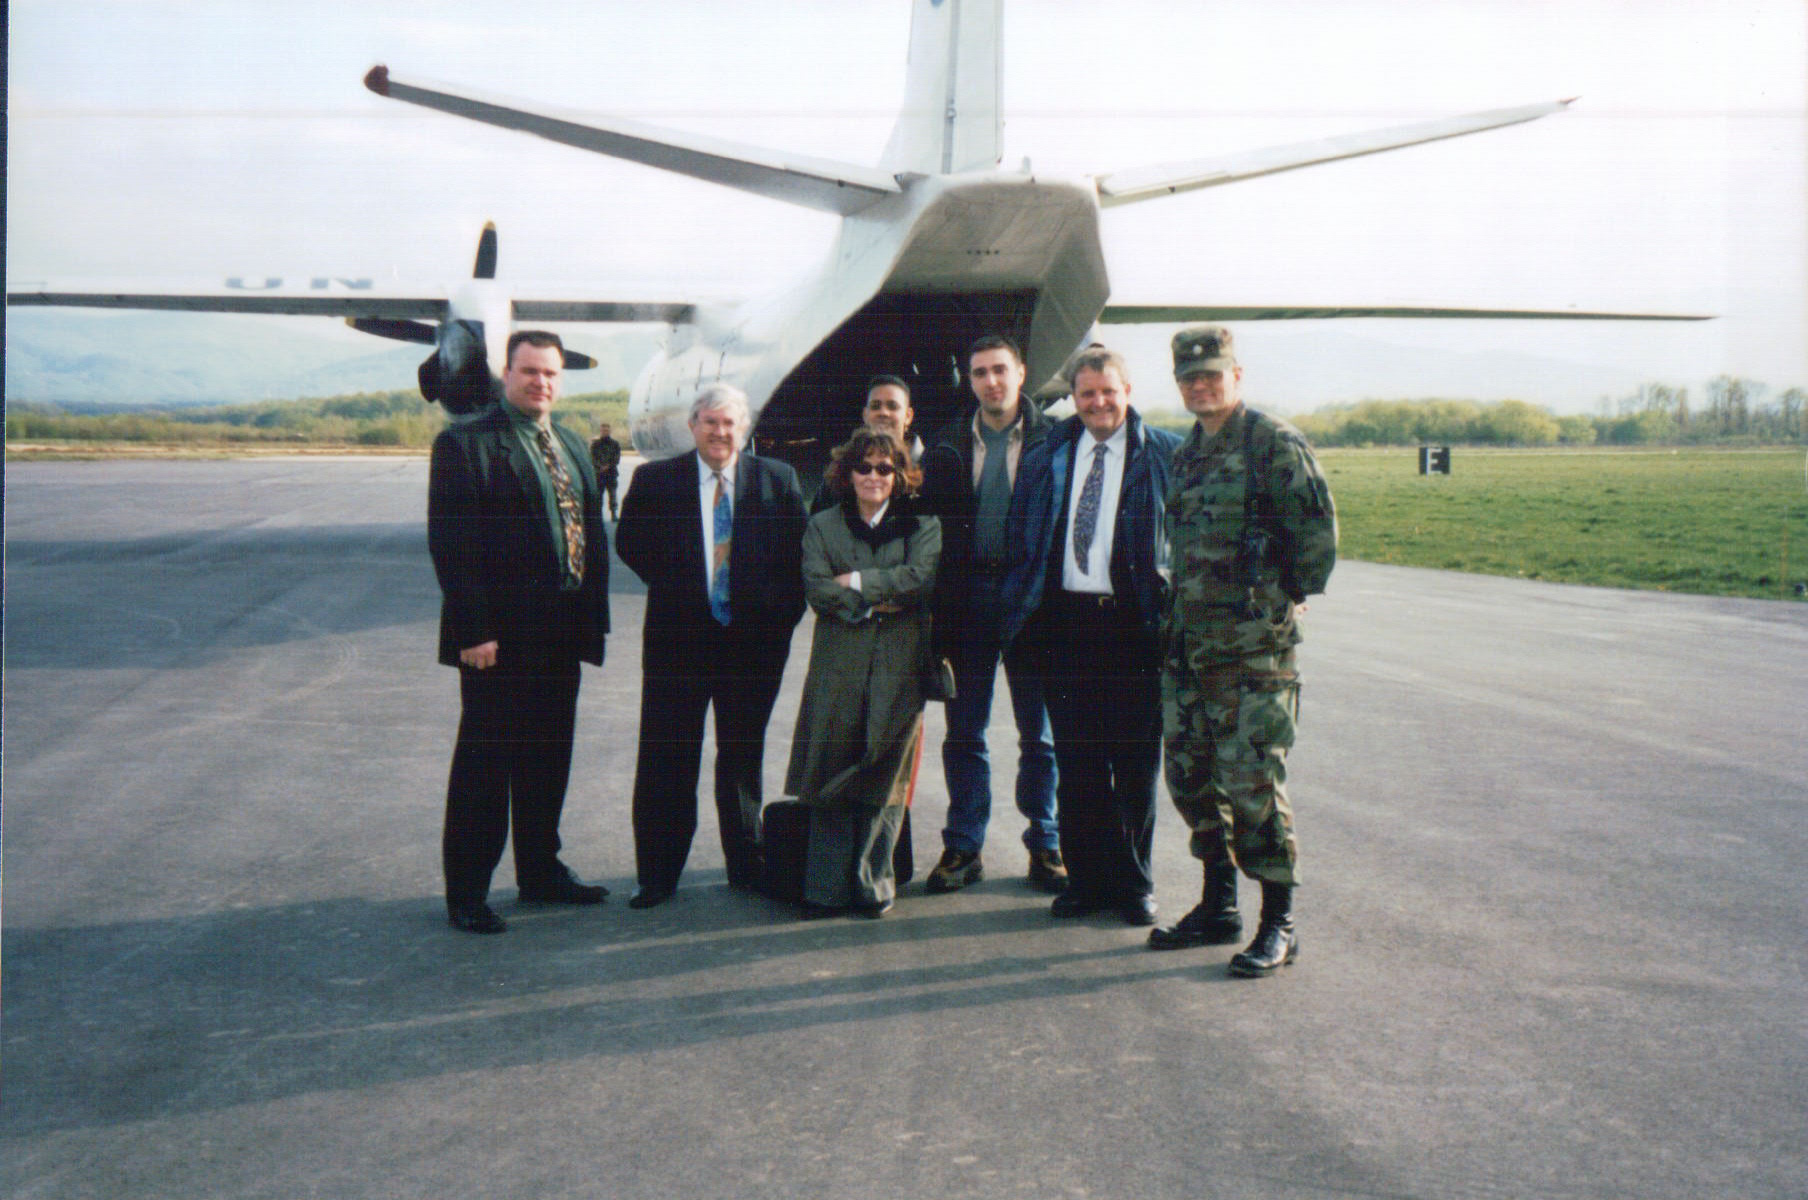 Mission to Sarajevo, 1998, photo provided by Mr Graham Blewitt